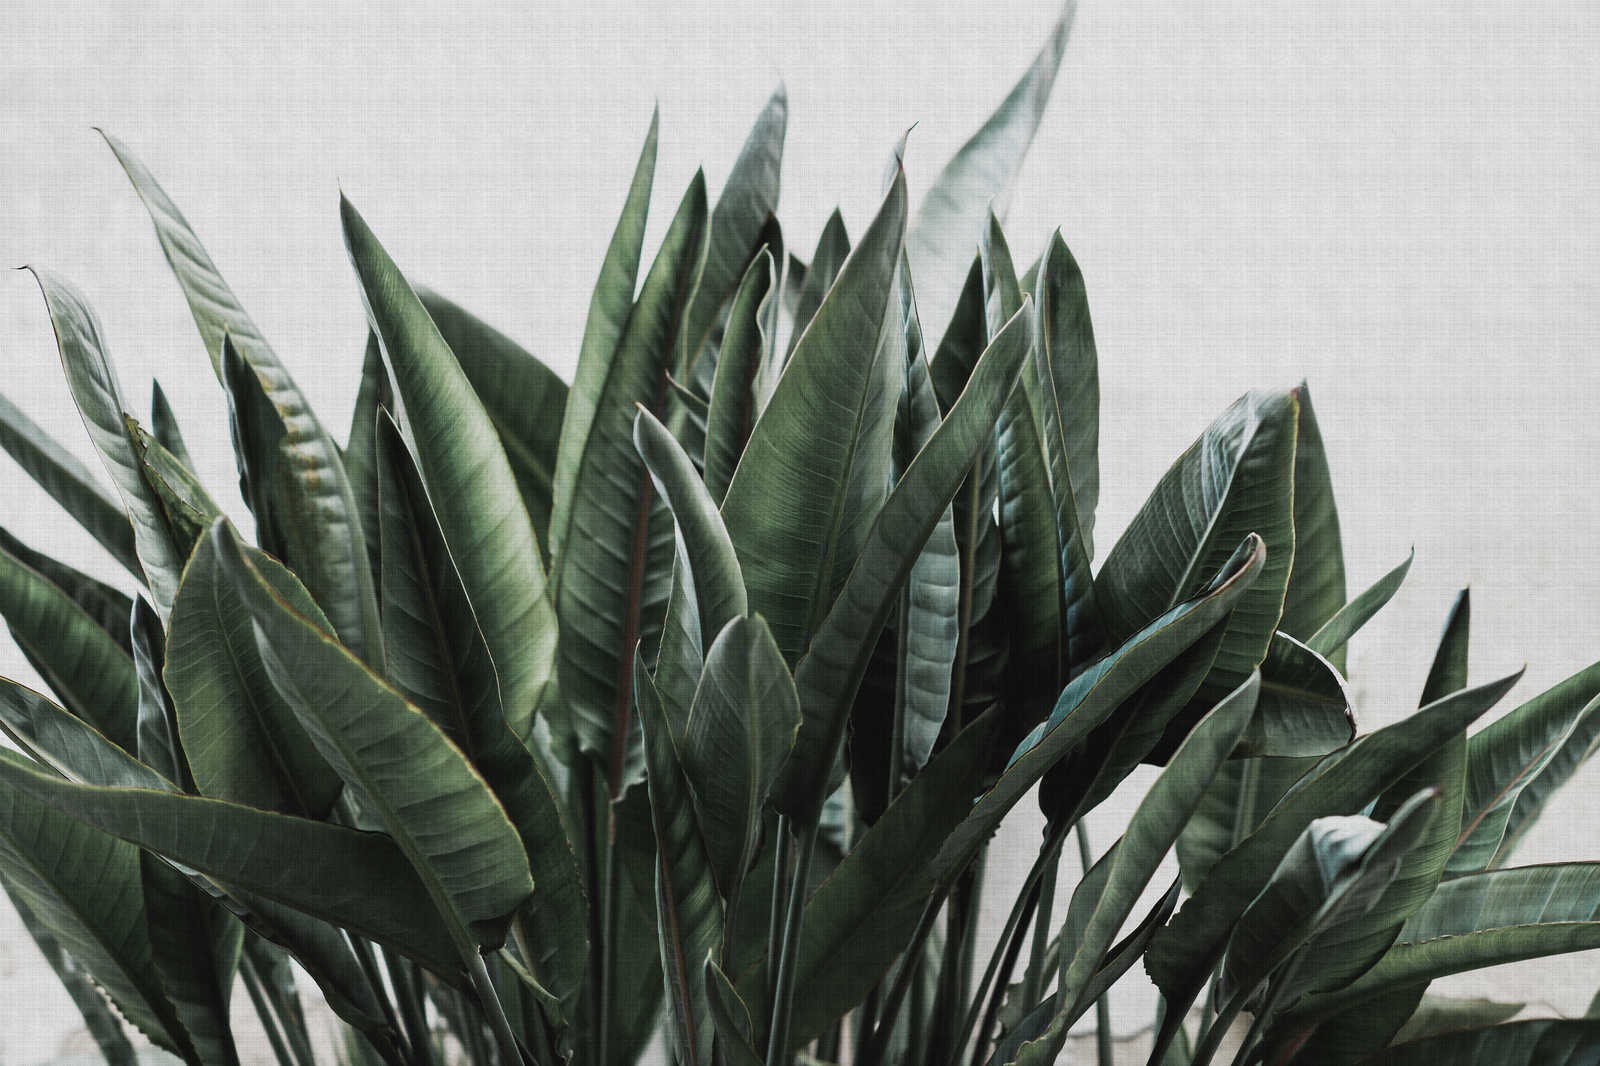             Urban jungle 2 - Palm leaves canvas picture, natural linen structure exotic plants - 0.90 m x 0.60 m
        